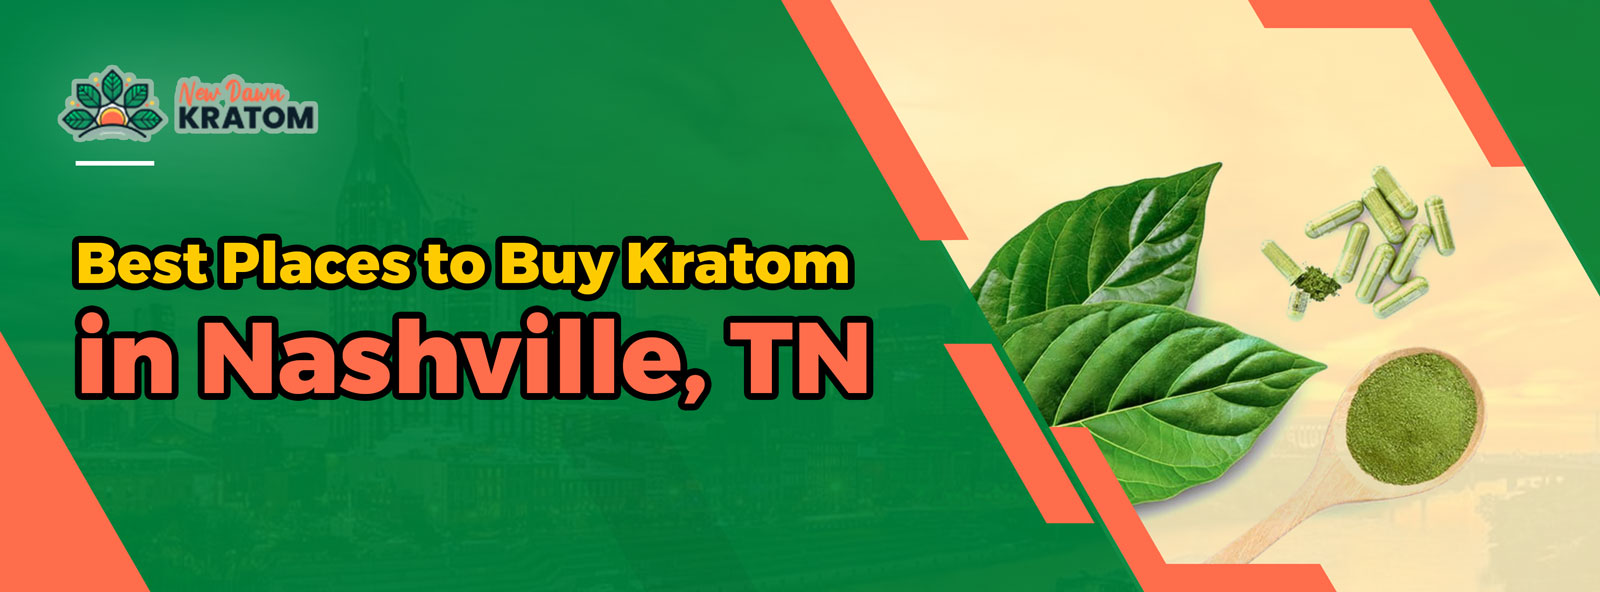 Best Places to Buy Kratom in Nashville, TN